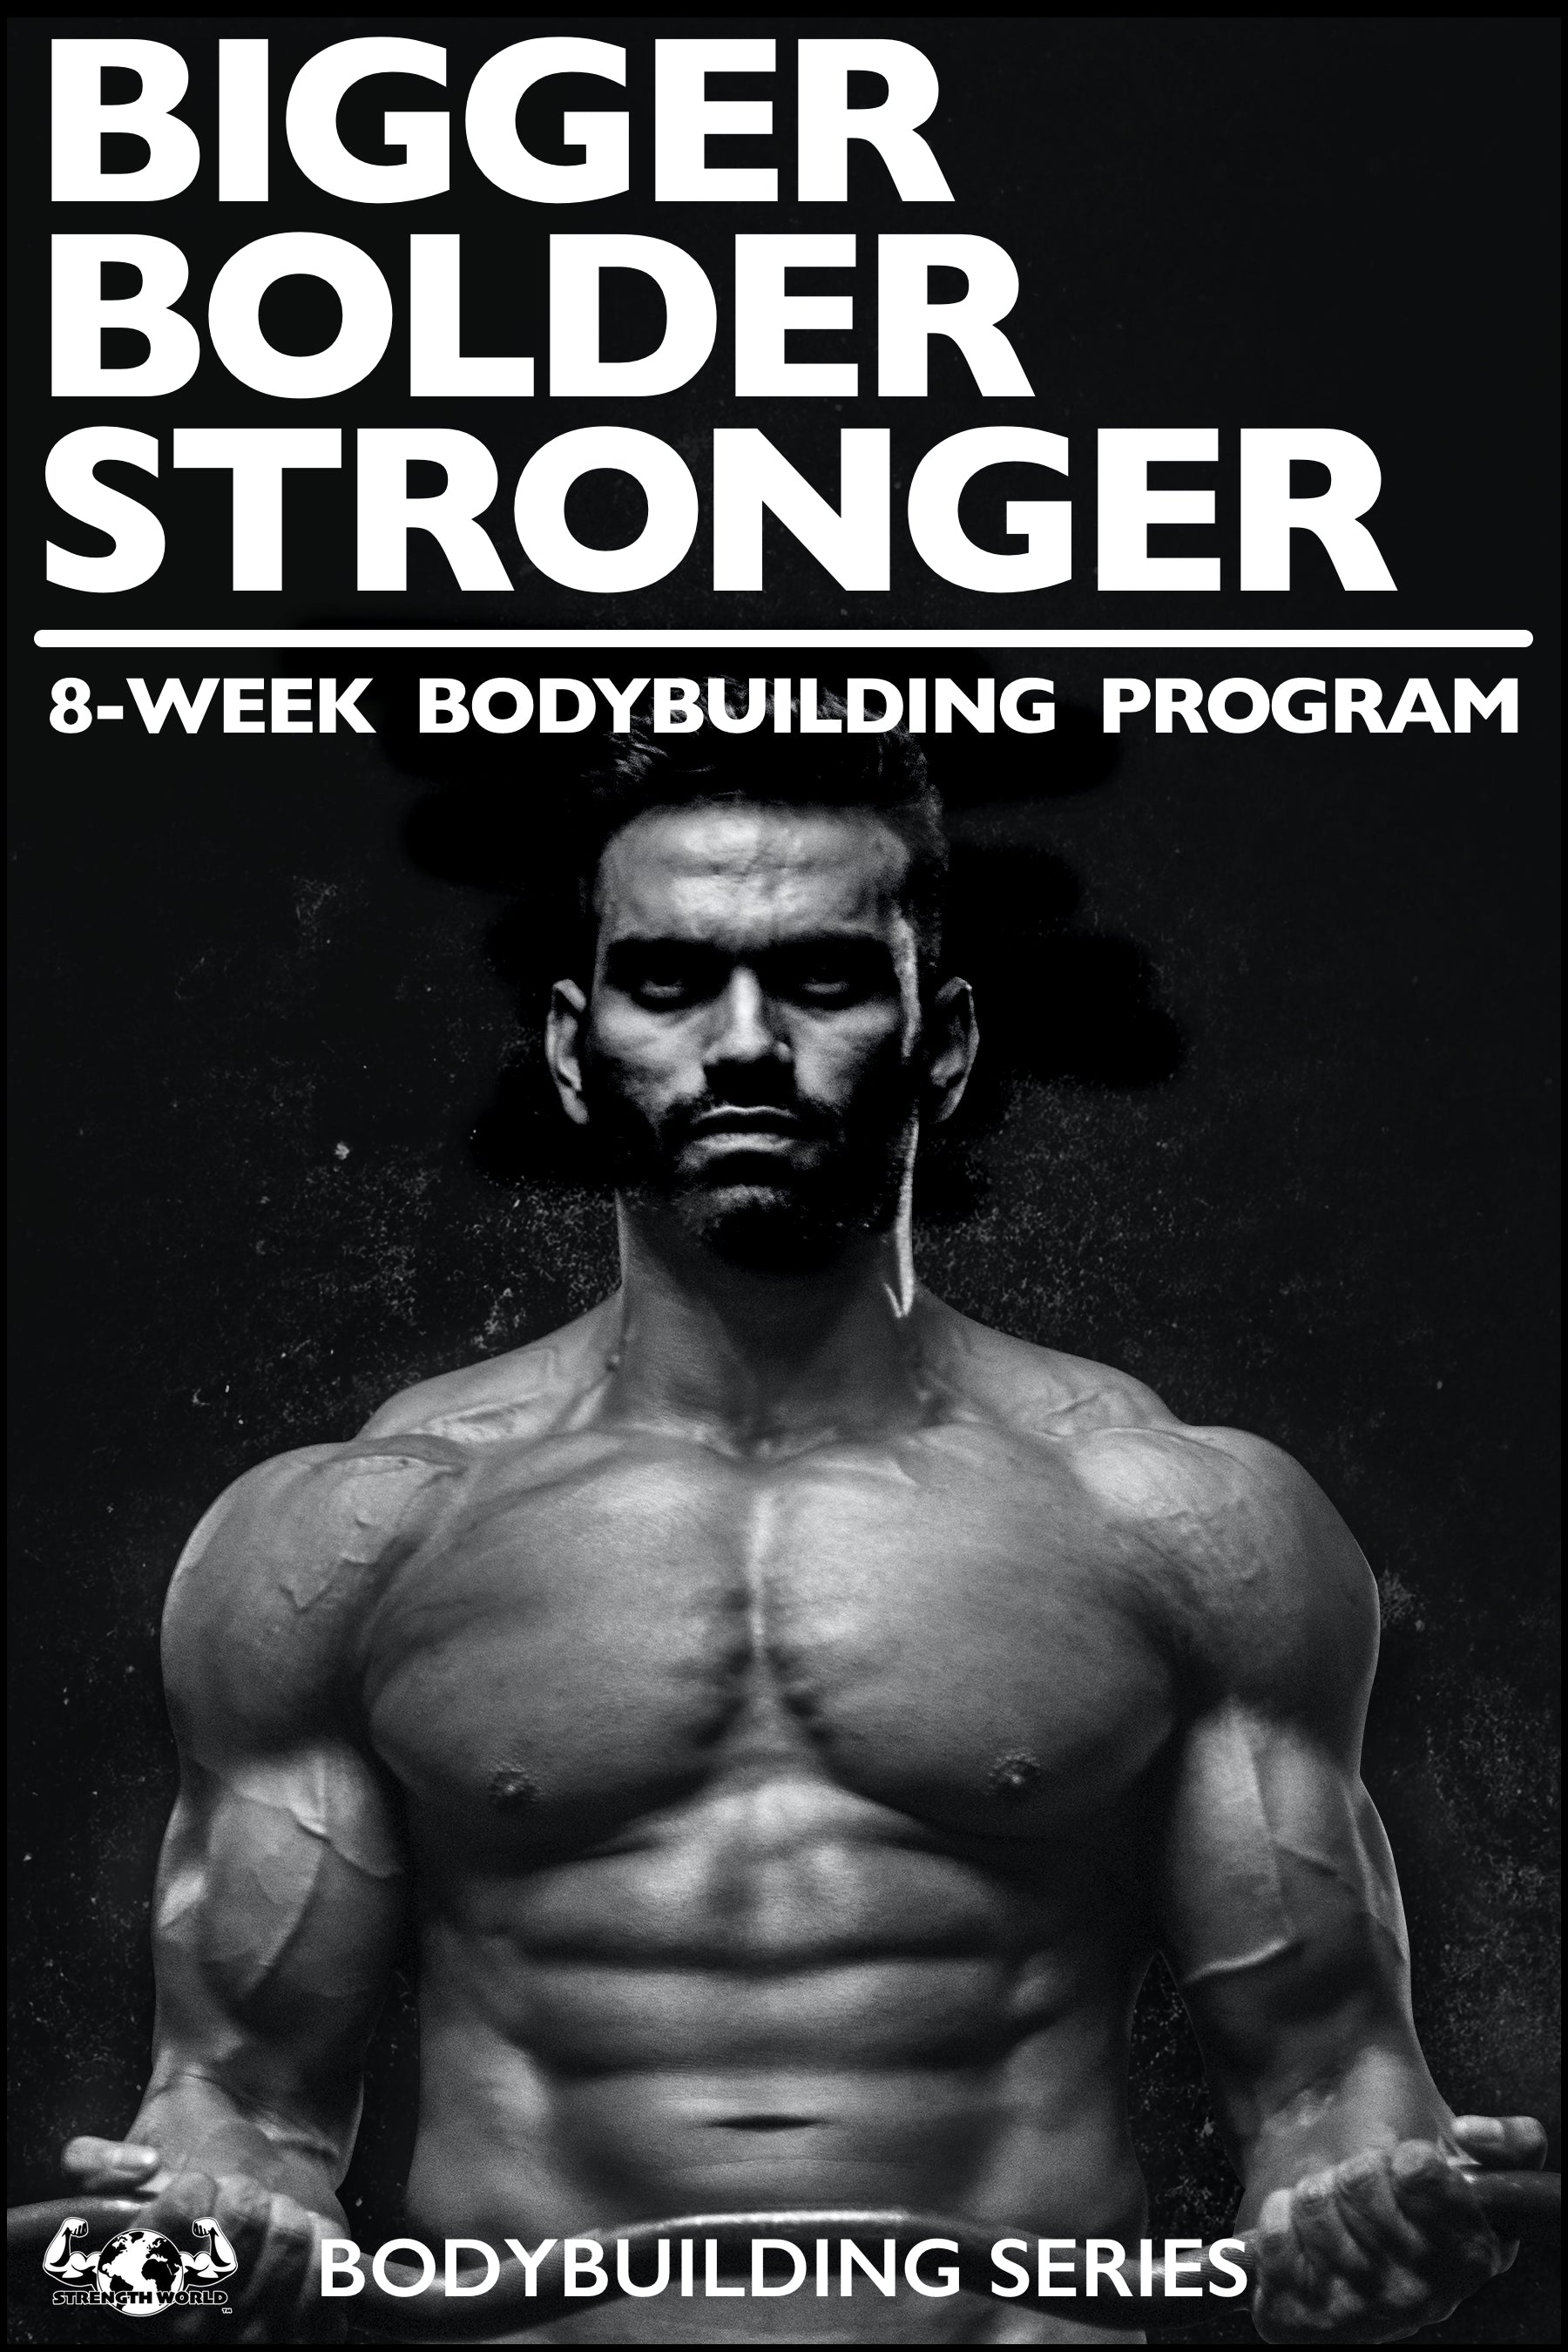 Bigger Bolder Stronger 8-Week Bodybuilding Program for men